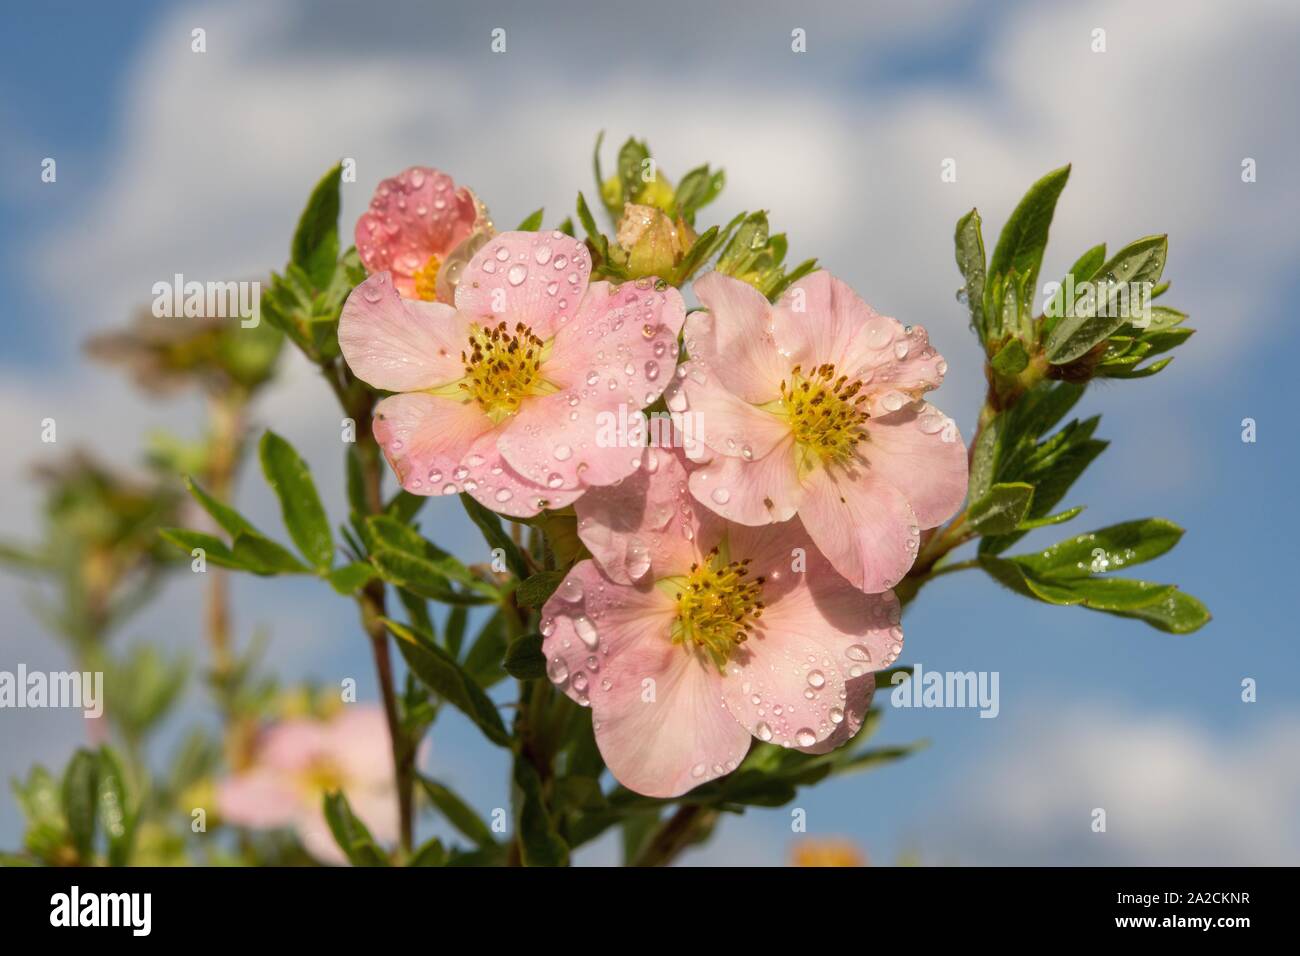 Finger shrub (Potentilla fruticosa), Princess variety, pink flowers with water drops, Germany Stock Photo